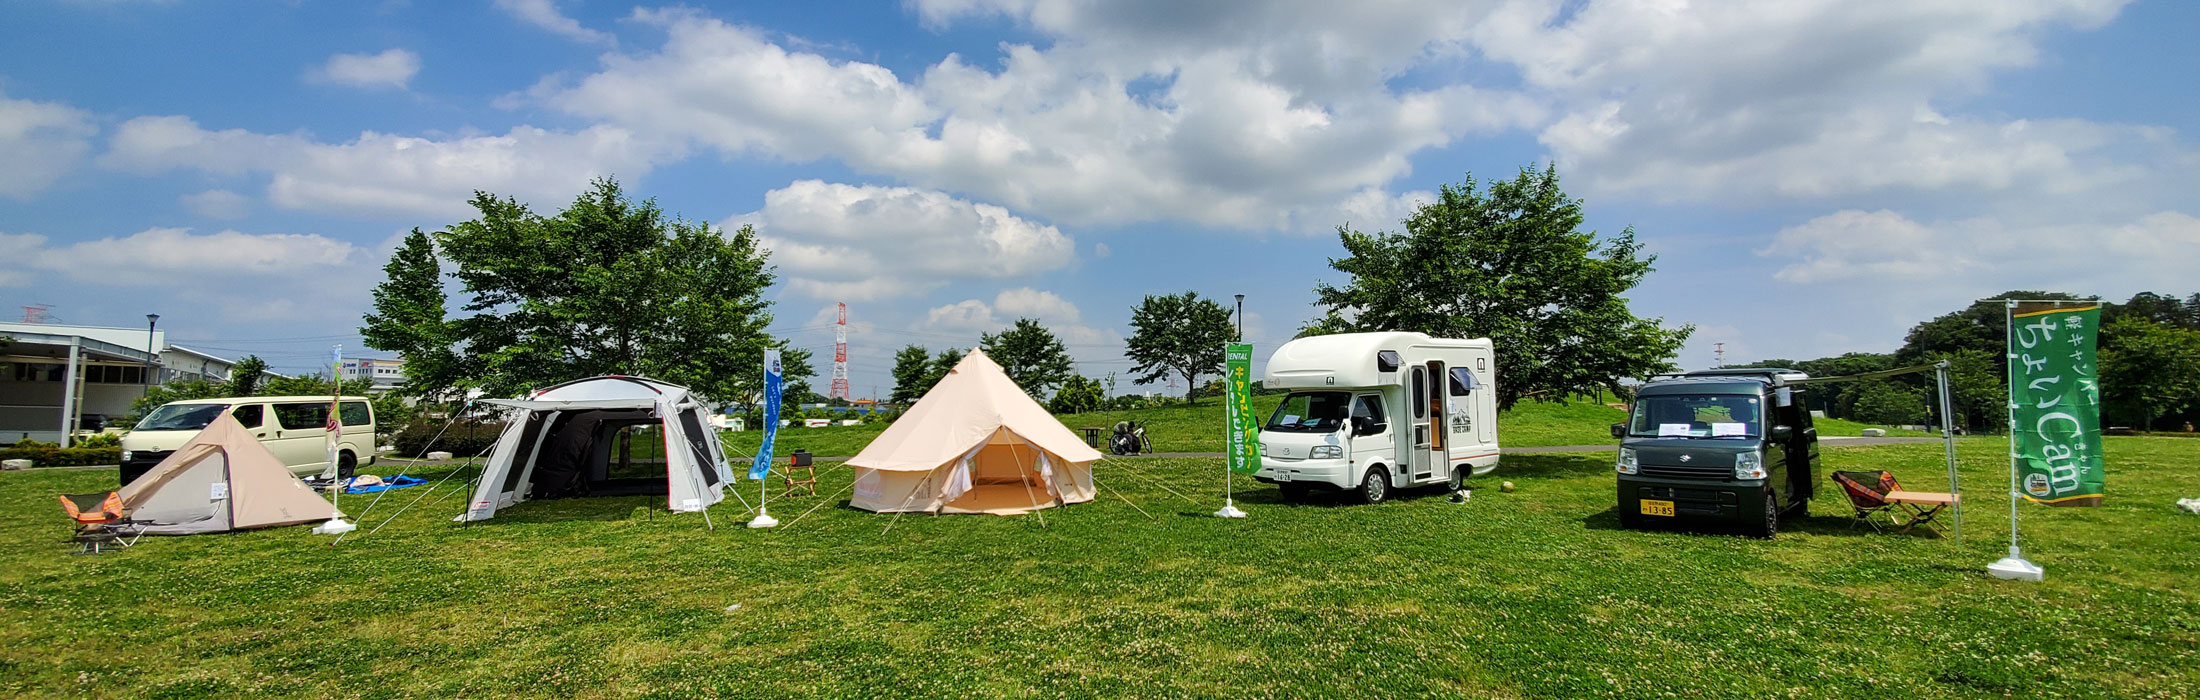 Groenten Tragisch noorden BASE CAMP – 千葉県のキャンピングカー・キャンプ用品レンタルサービス【ベースキャンプ】